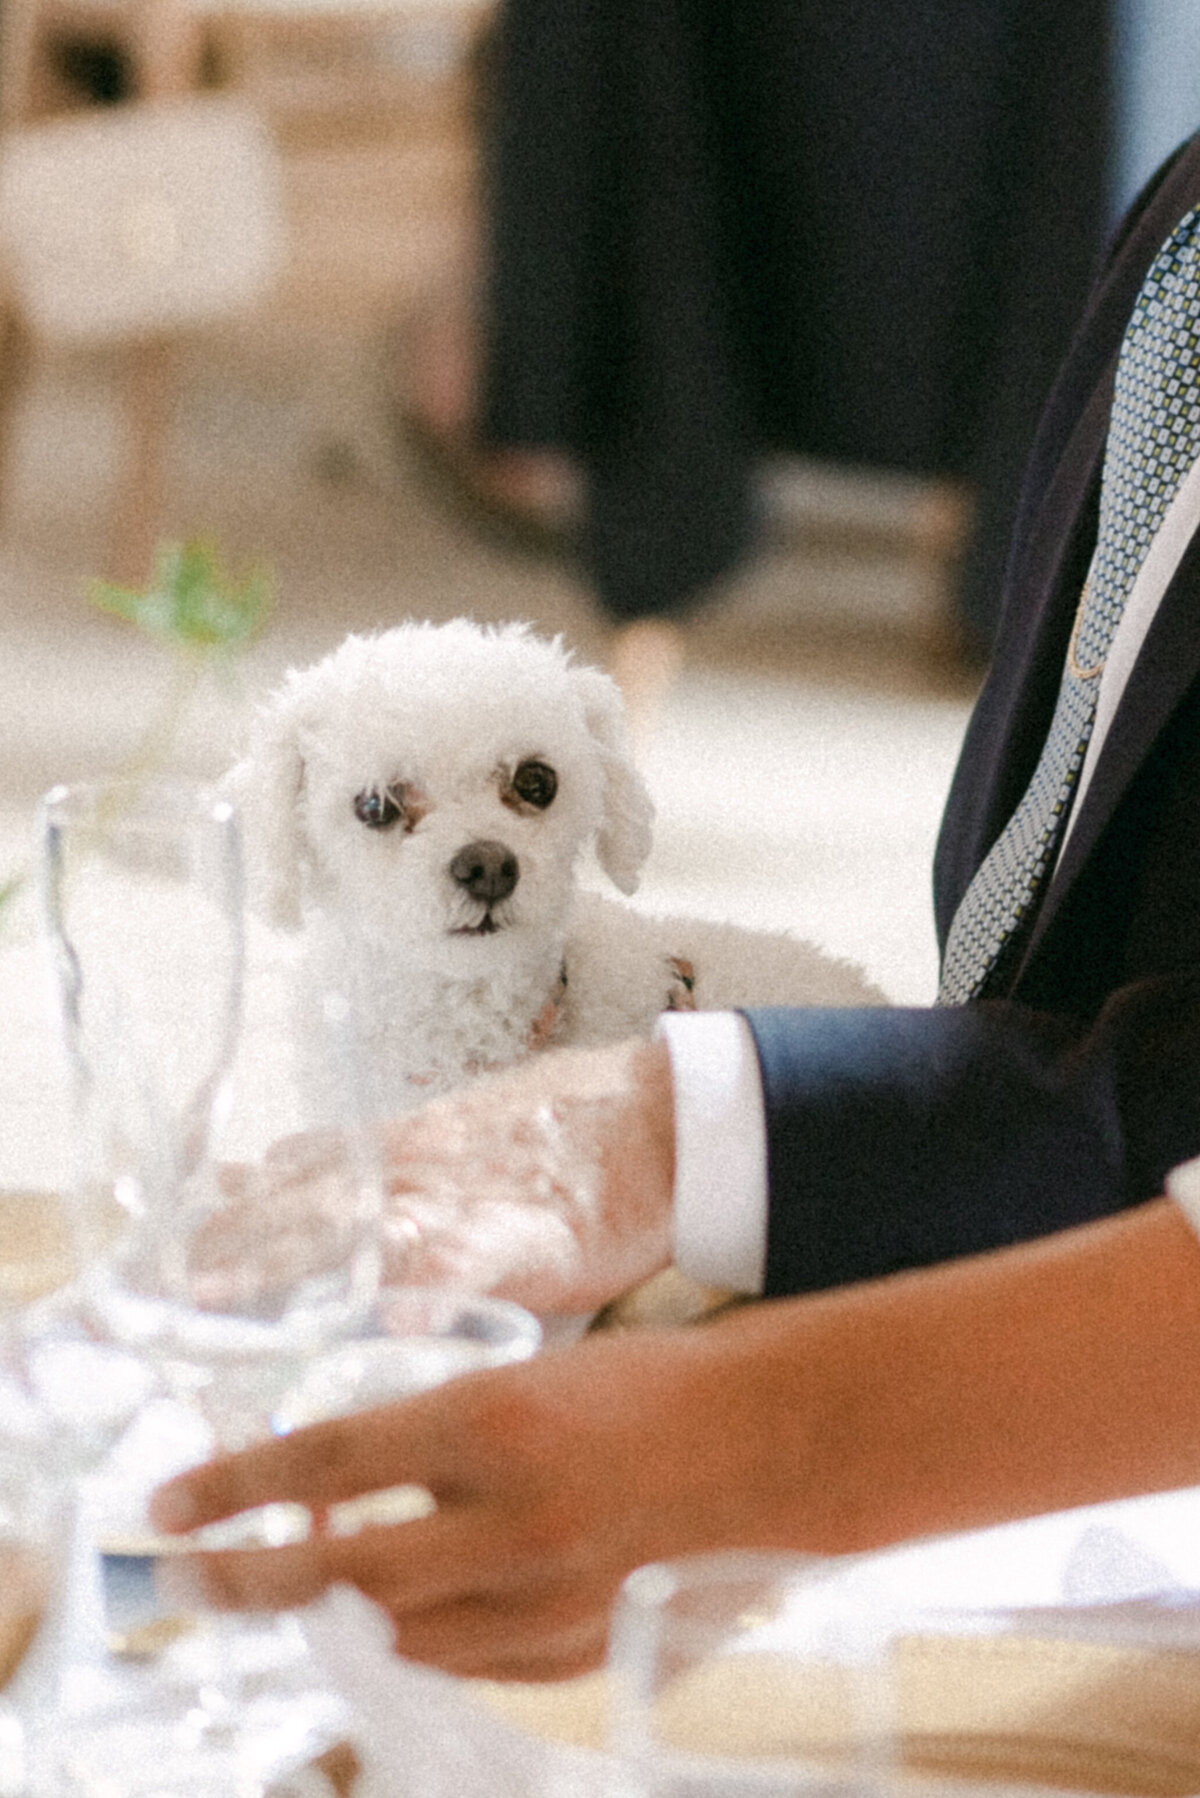 A dog at wedding reception captured by wedding photographer Hannika Gabrielsson.